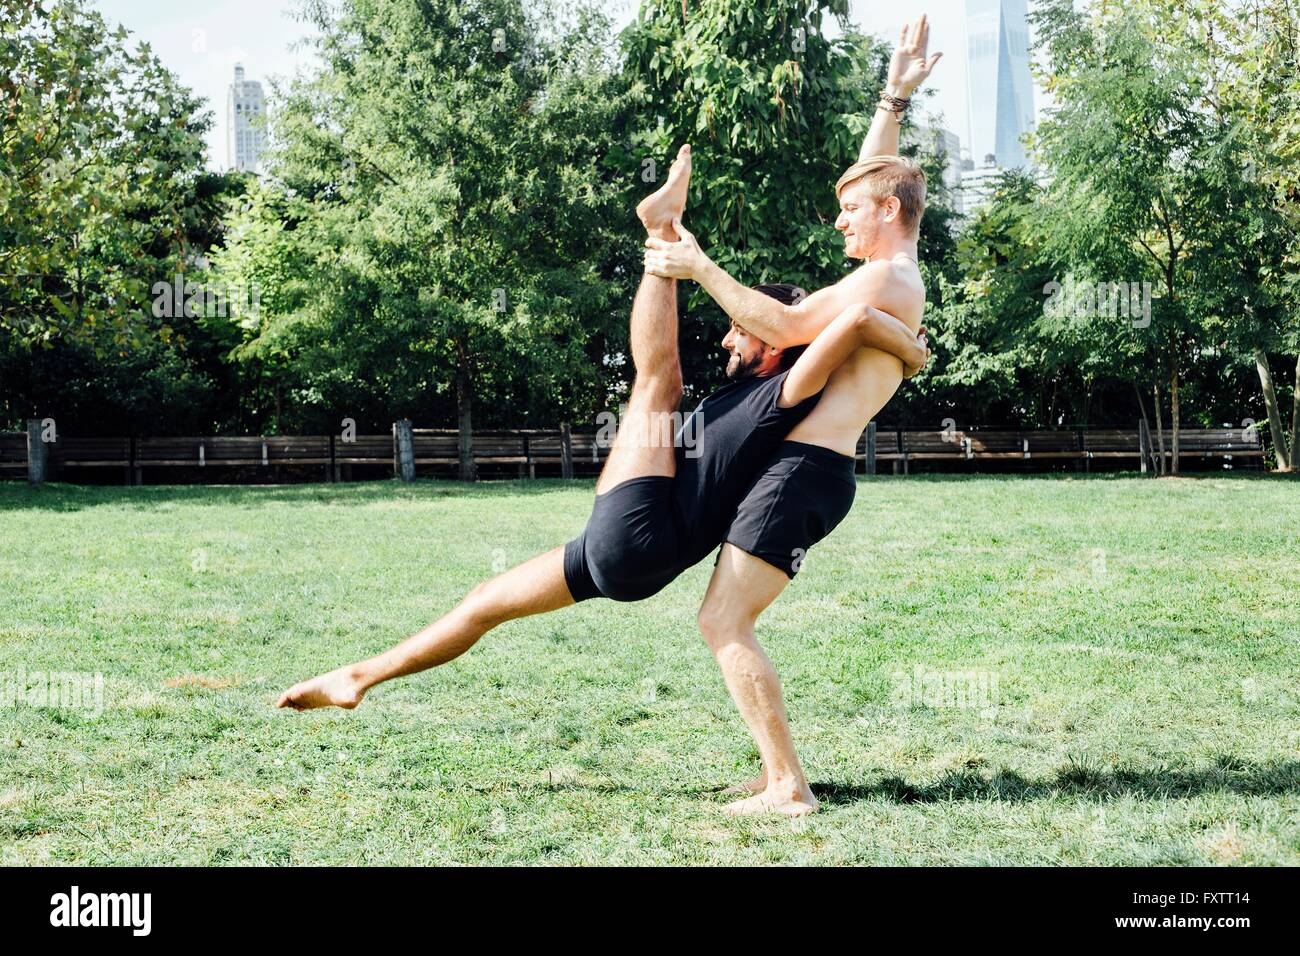 Two men practising yoga lift position in park Stock Photo - Alamy